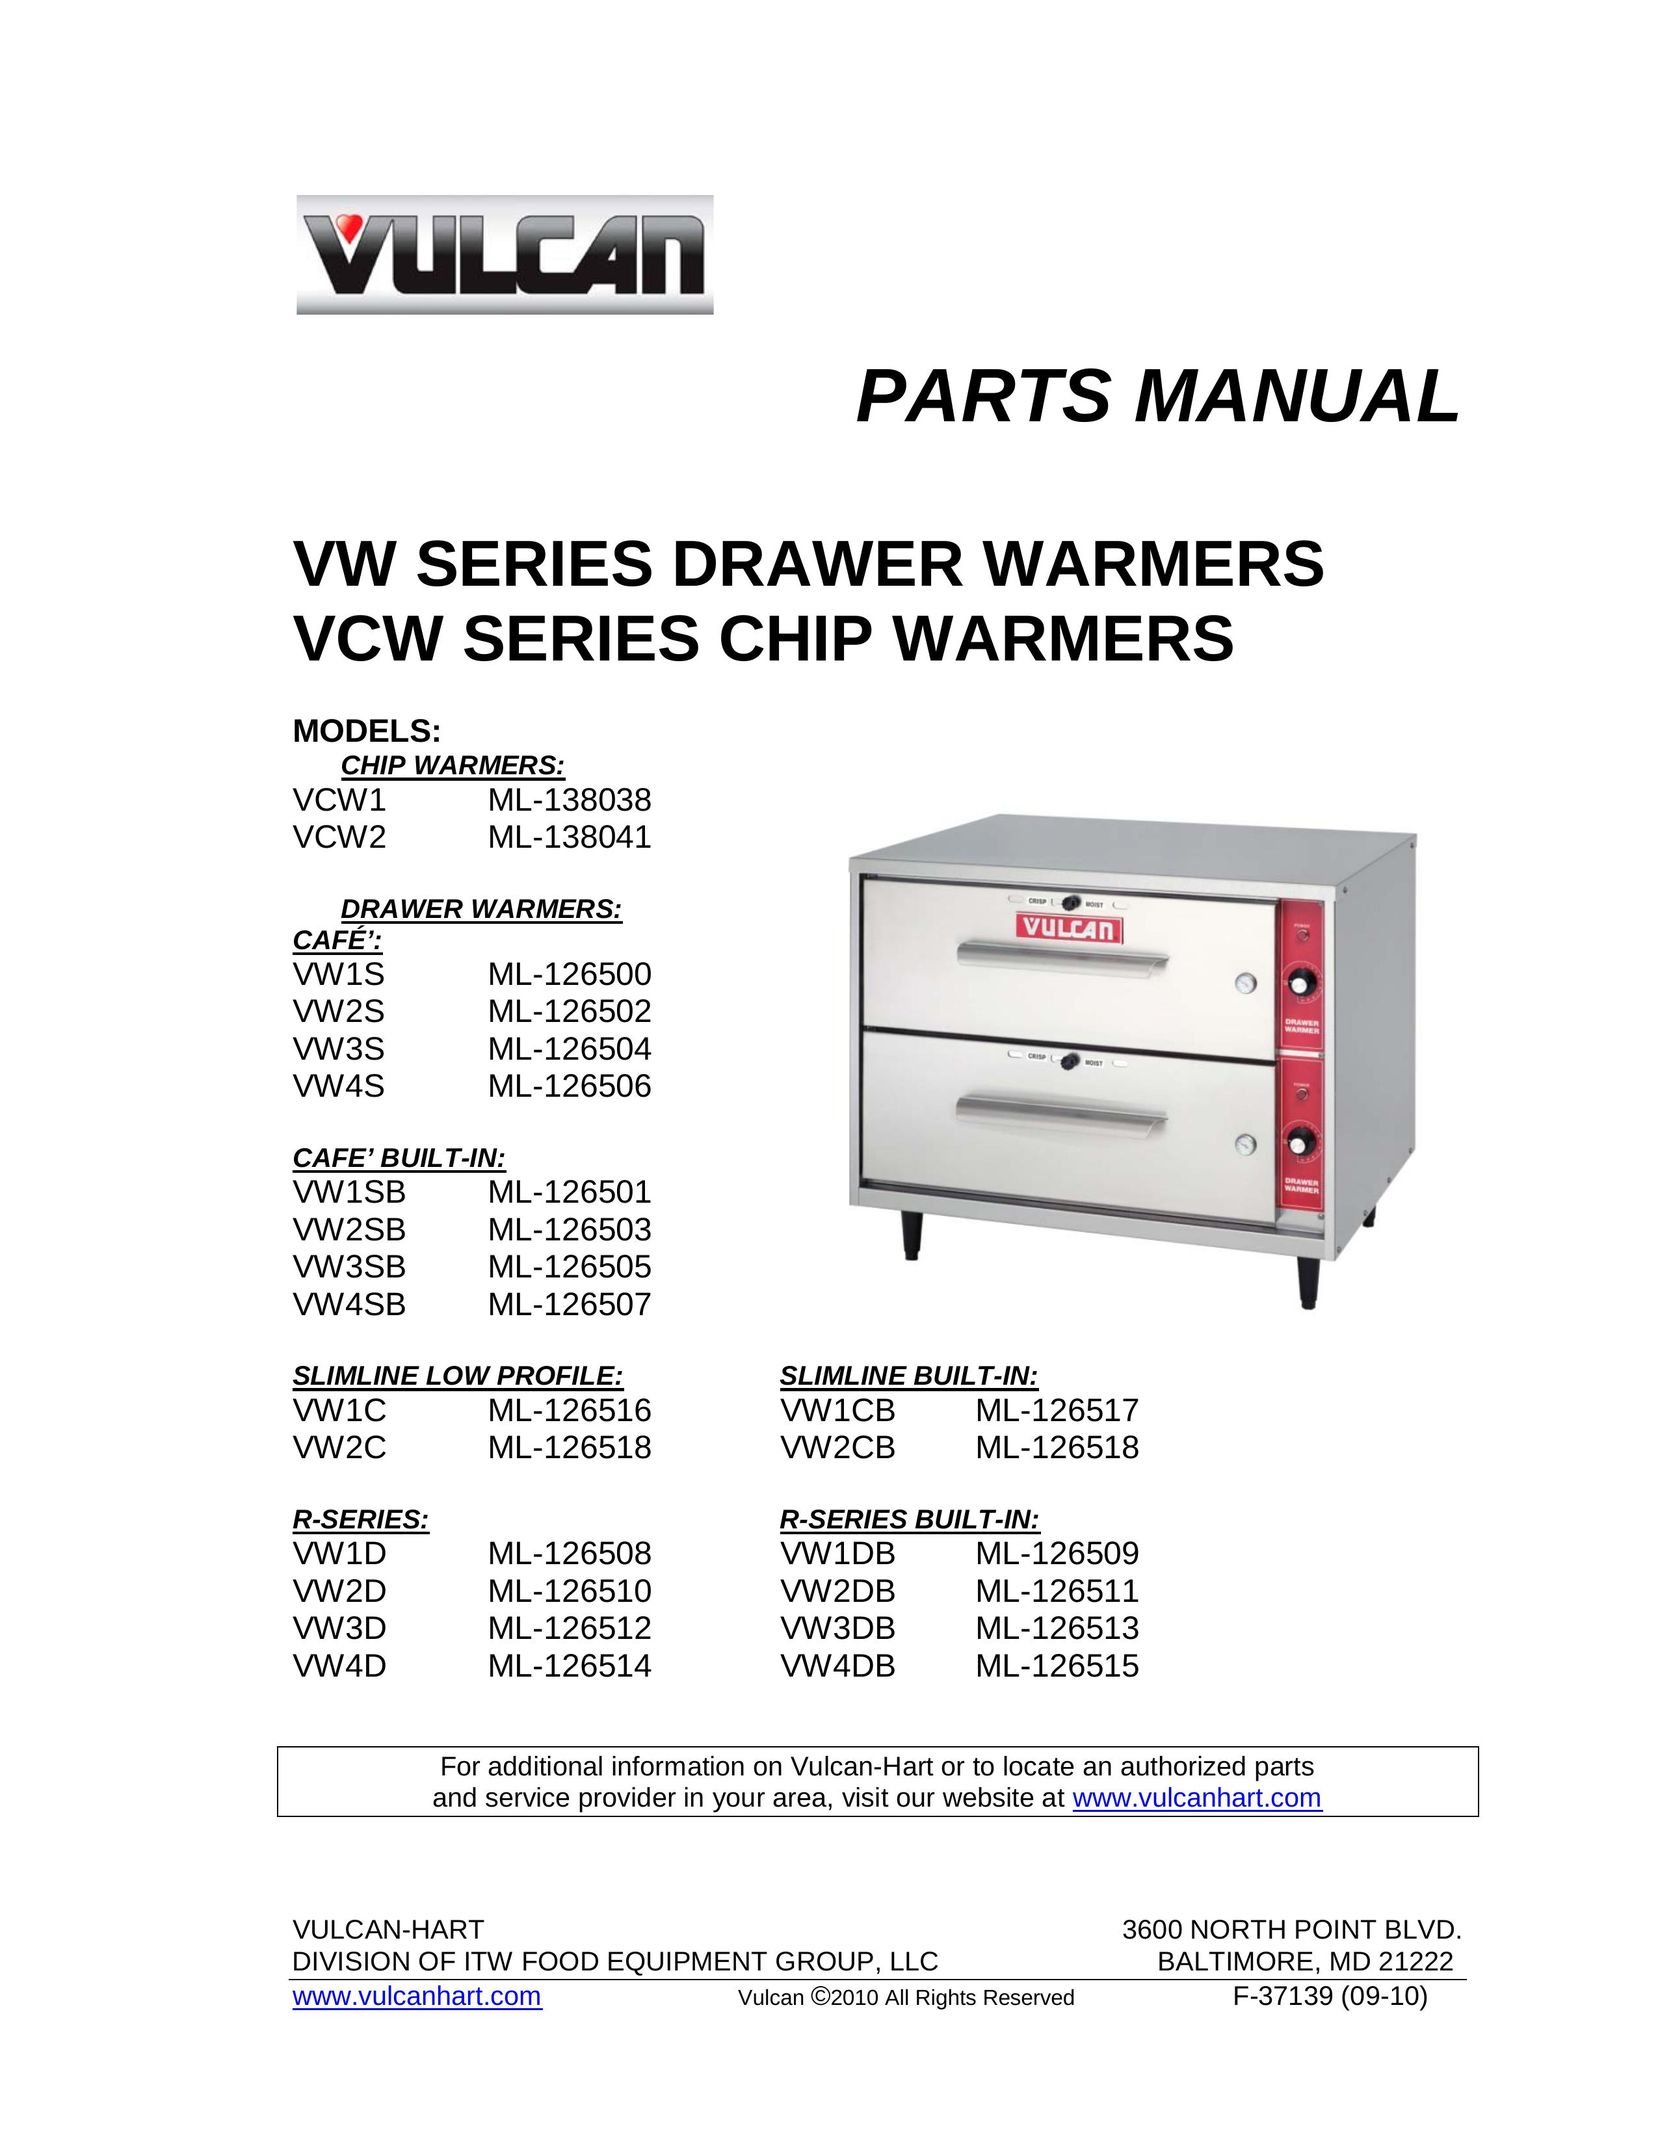 Vulcan-Hart VCW2 ML-138041 Food Warmer User Manual